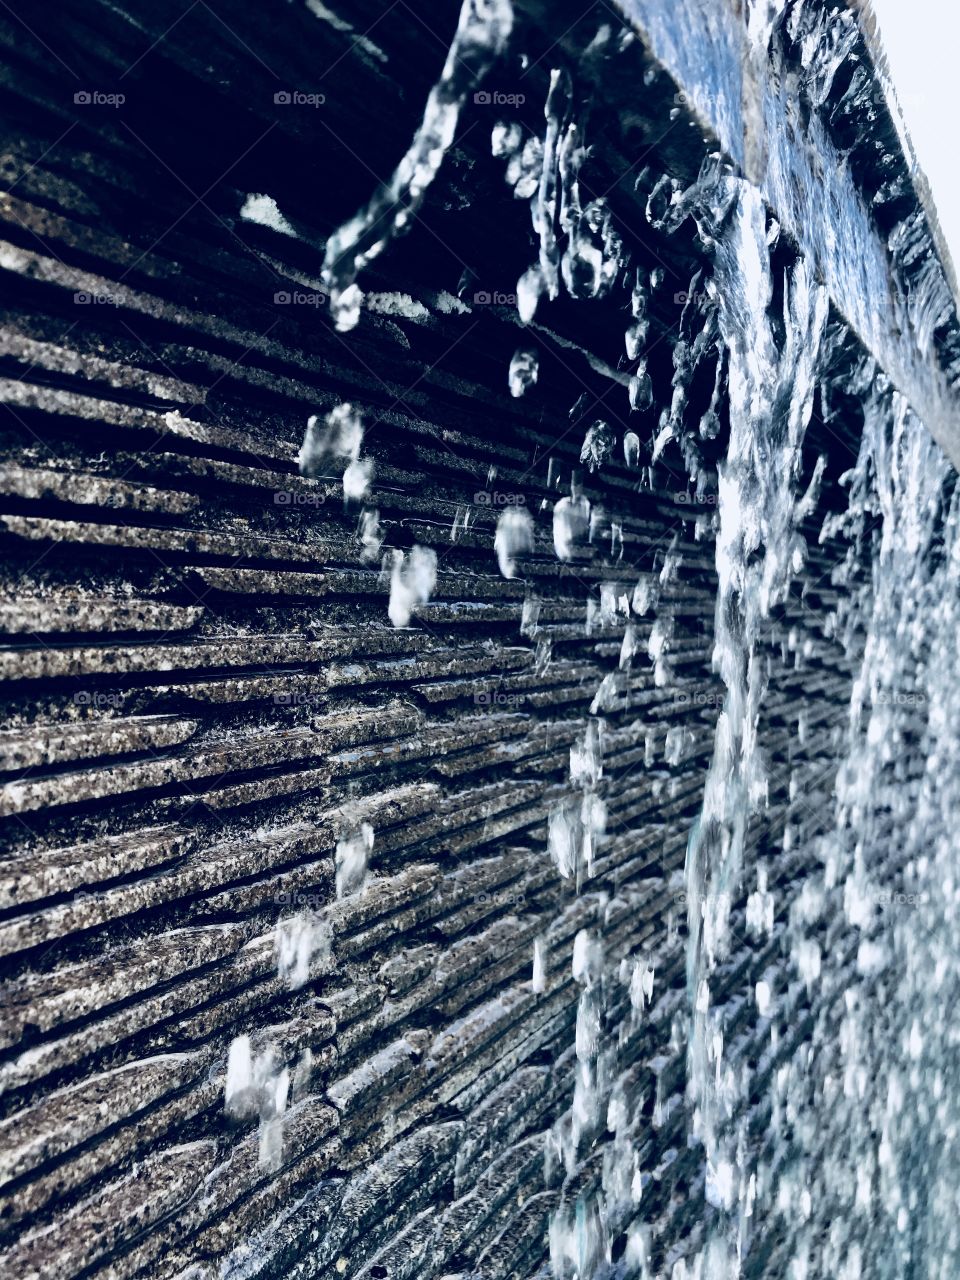 Waterdrops falling down a stony wall